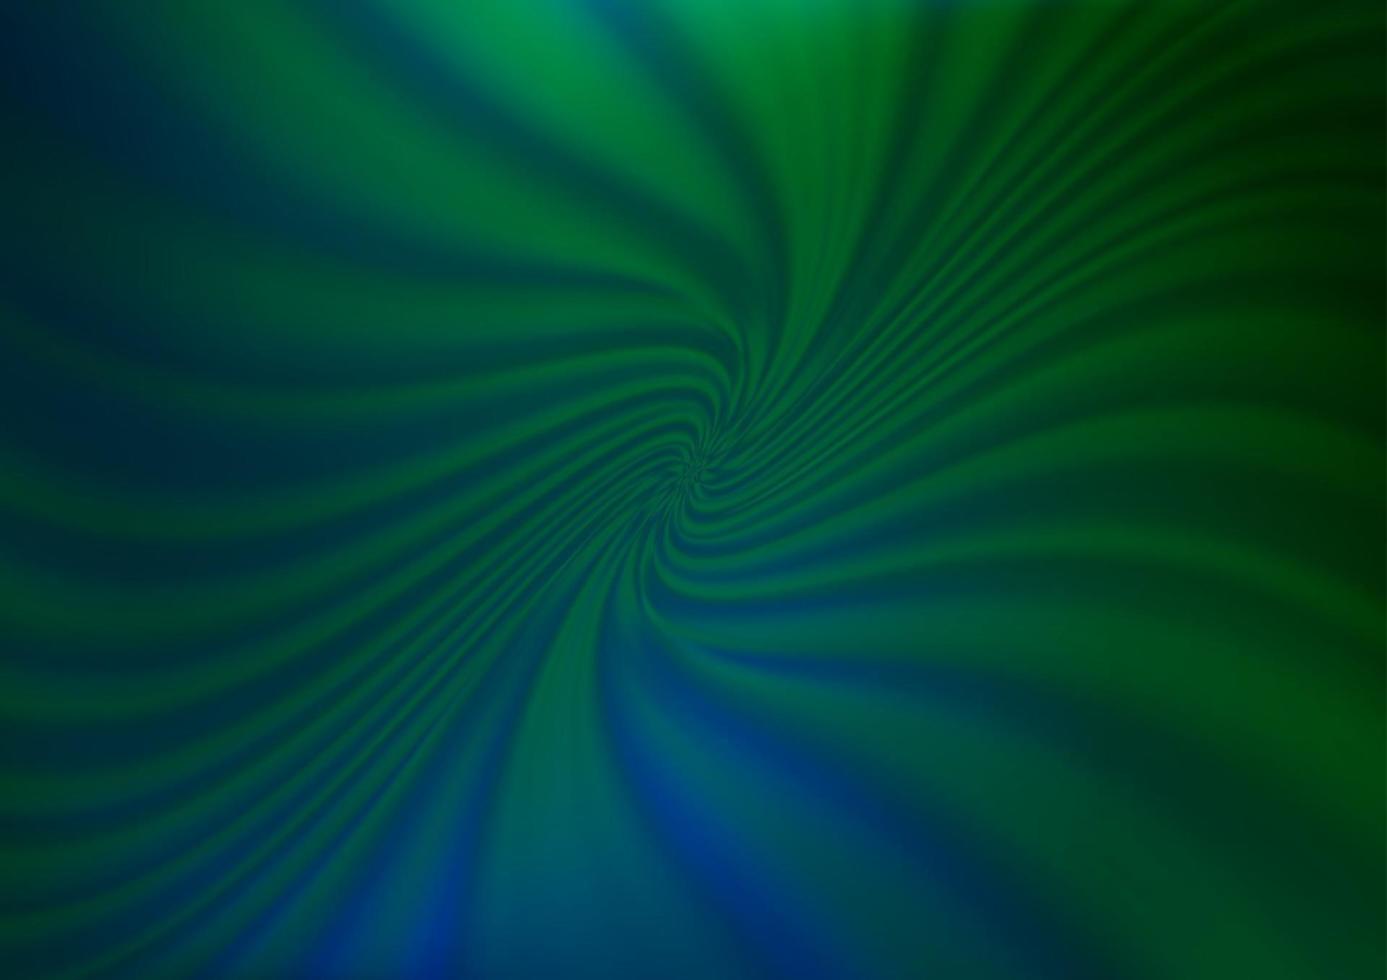 Plantilla abstracta brillante de vector azul oscuro, verde.